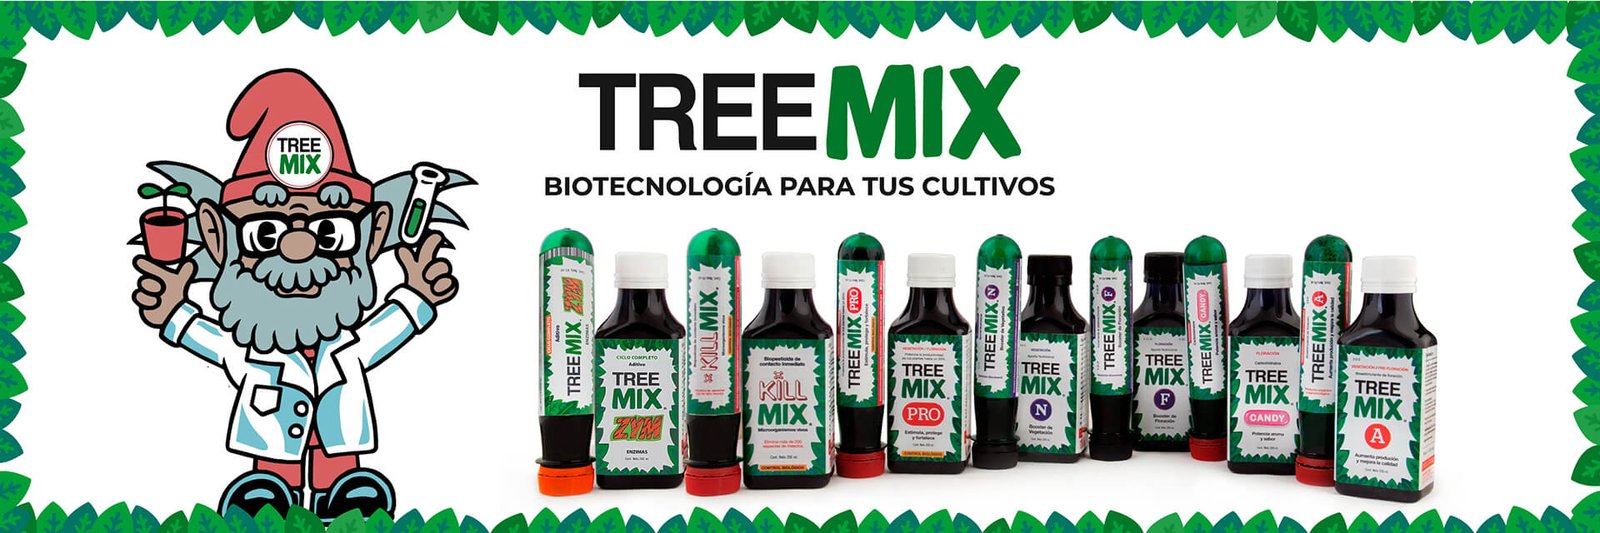 Tree Mix Slide